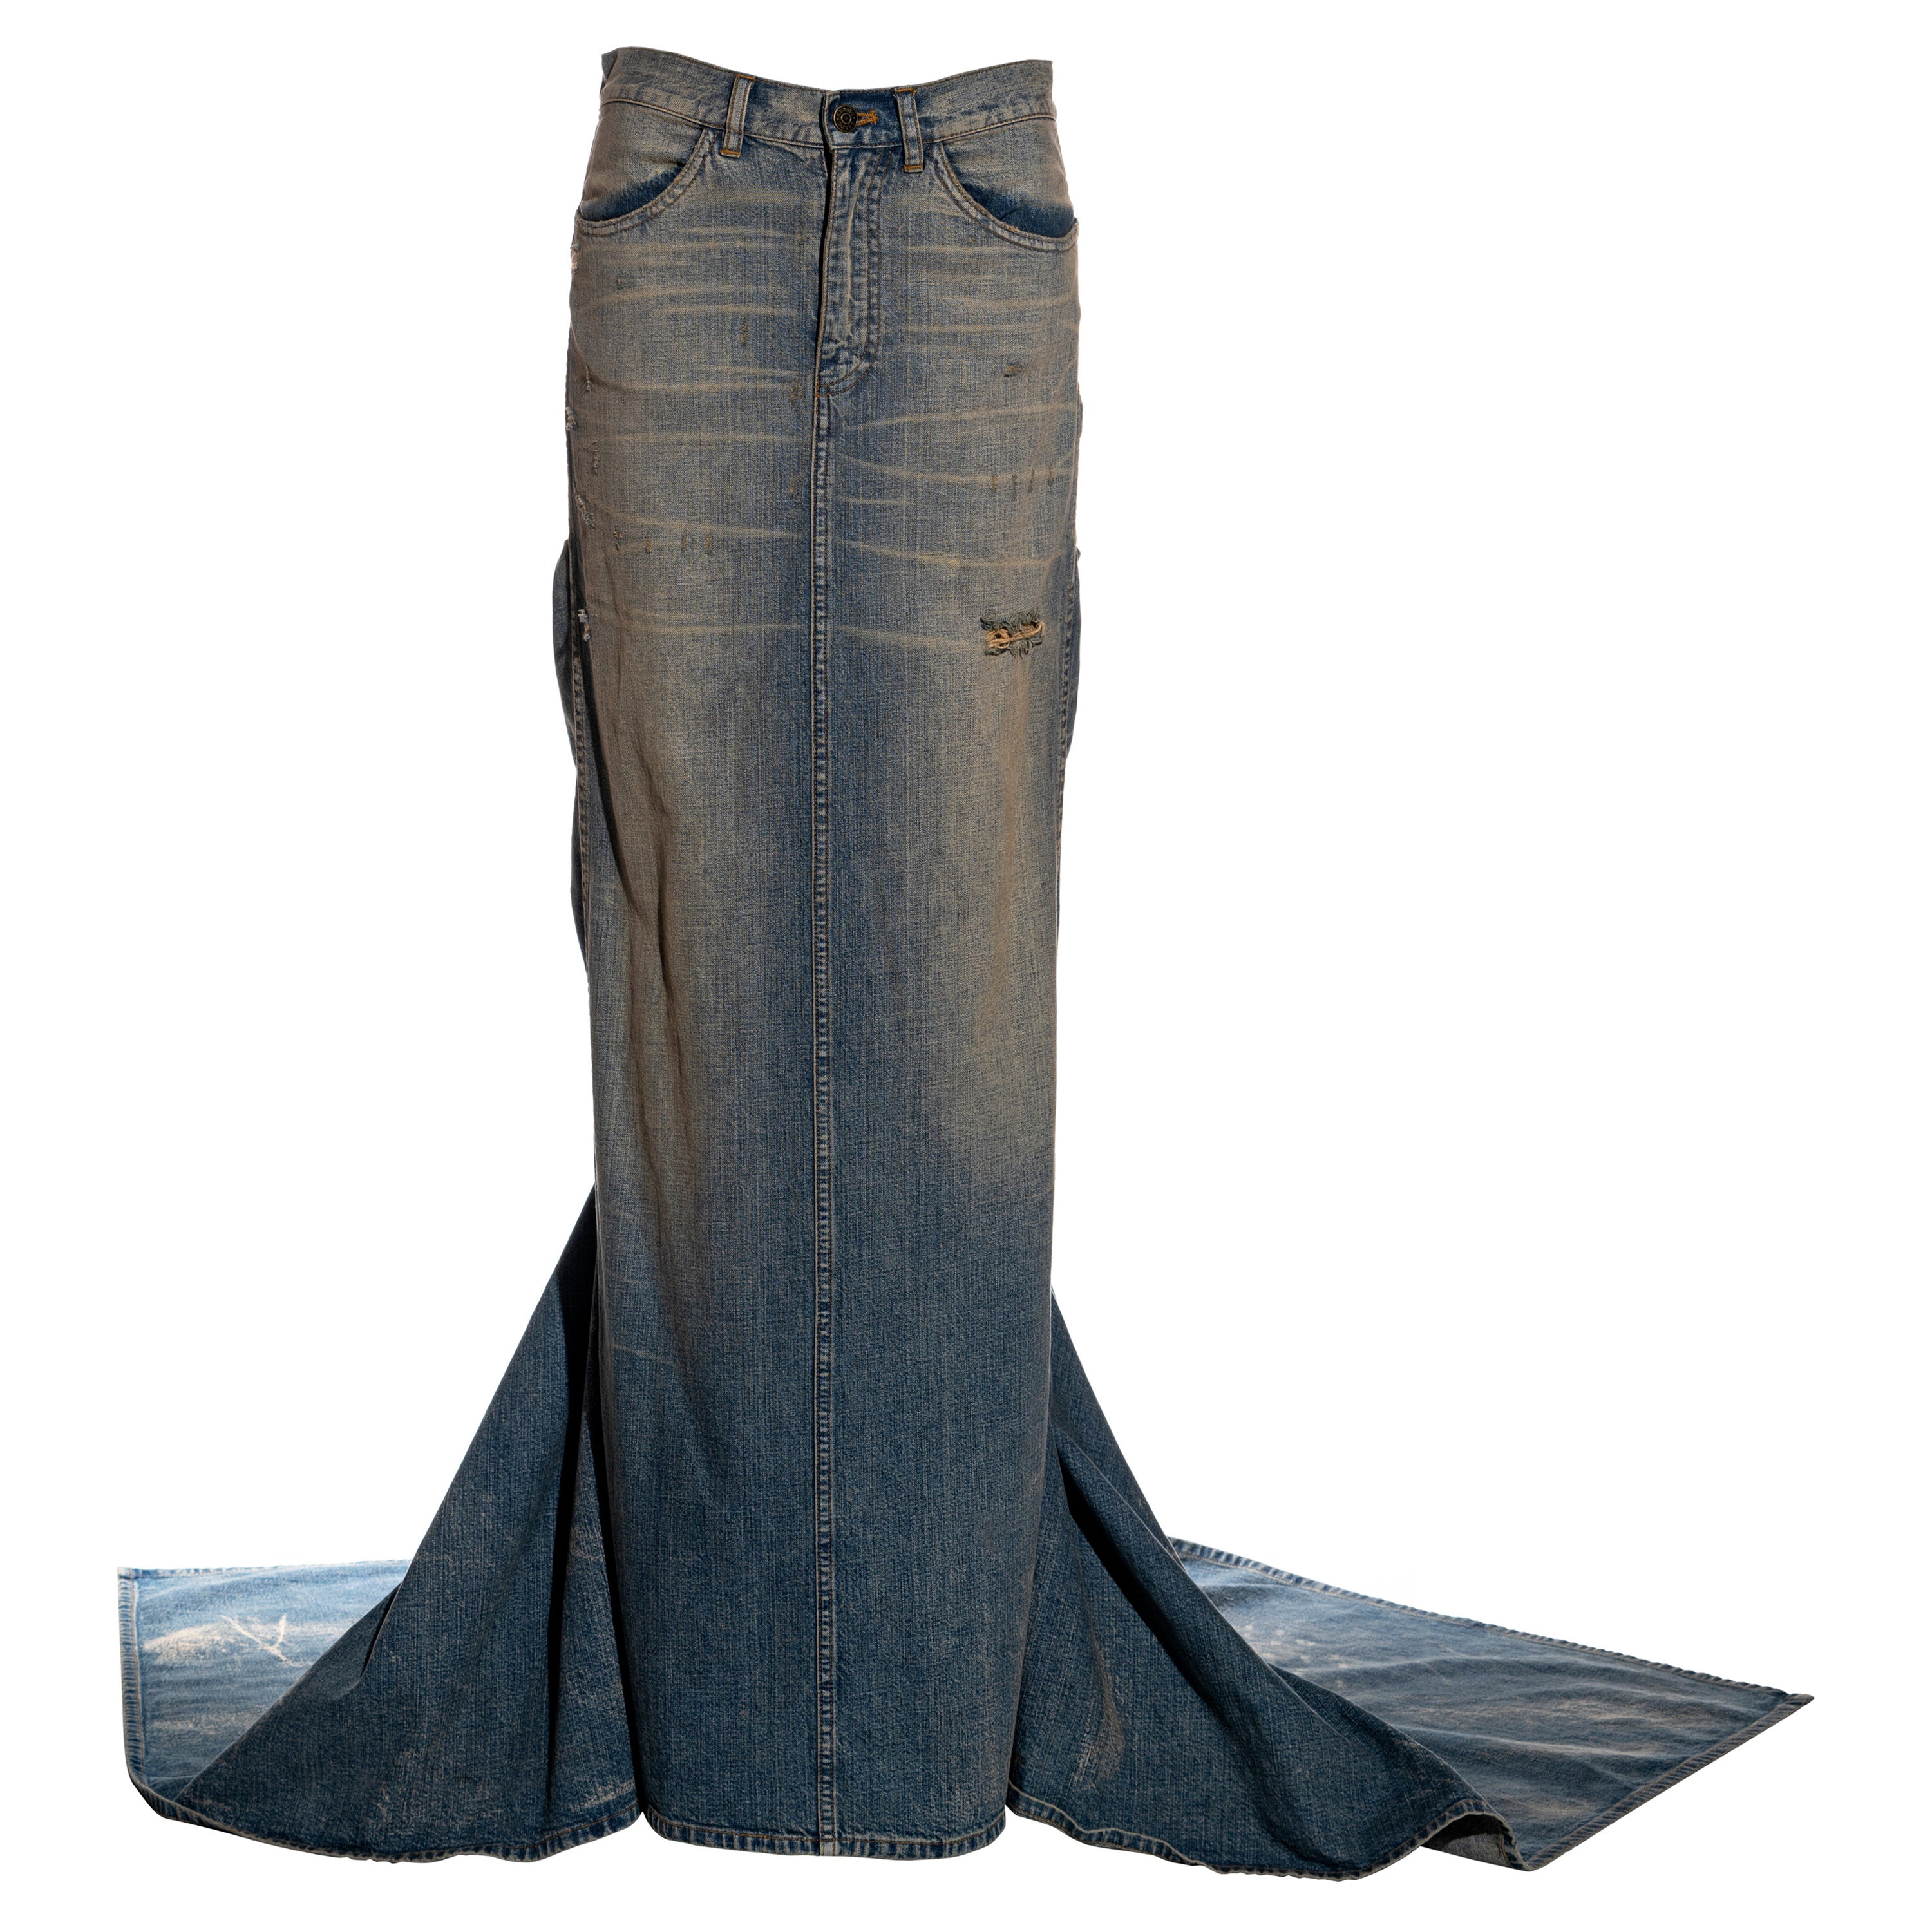 Ralph Lauren distressed denim floor-length bustle skirt with train, ss 2003